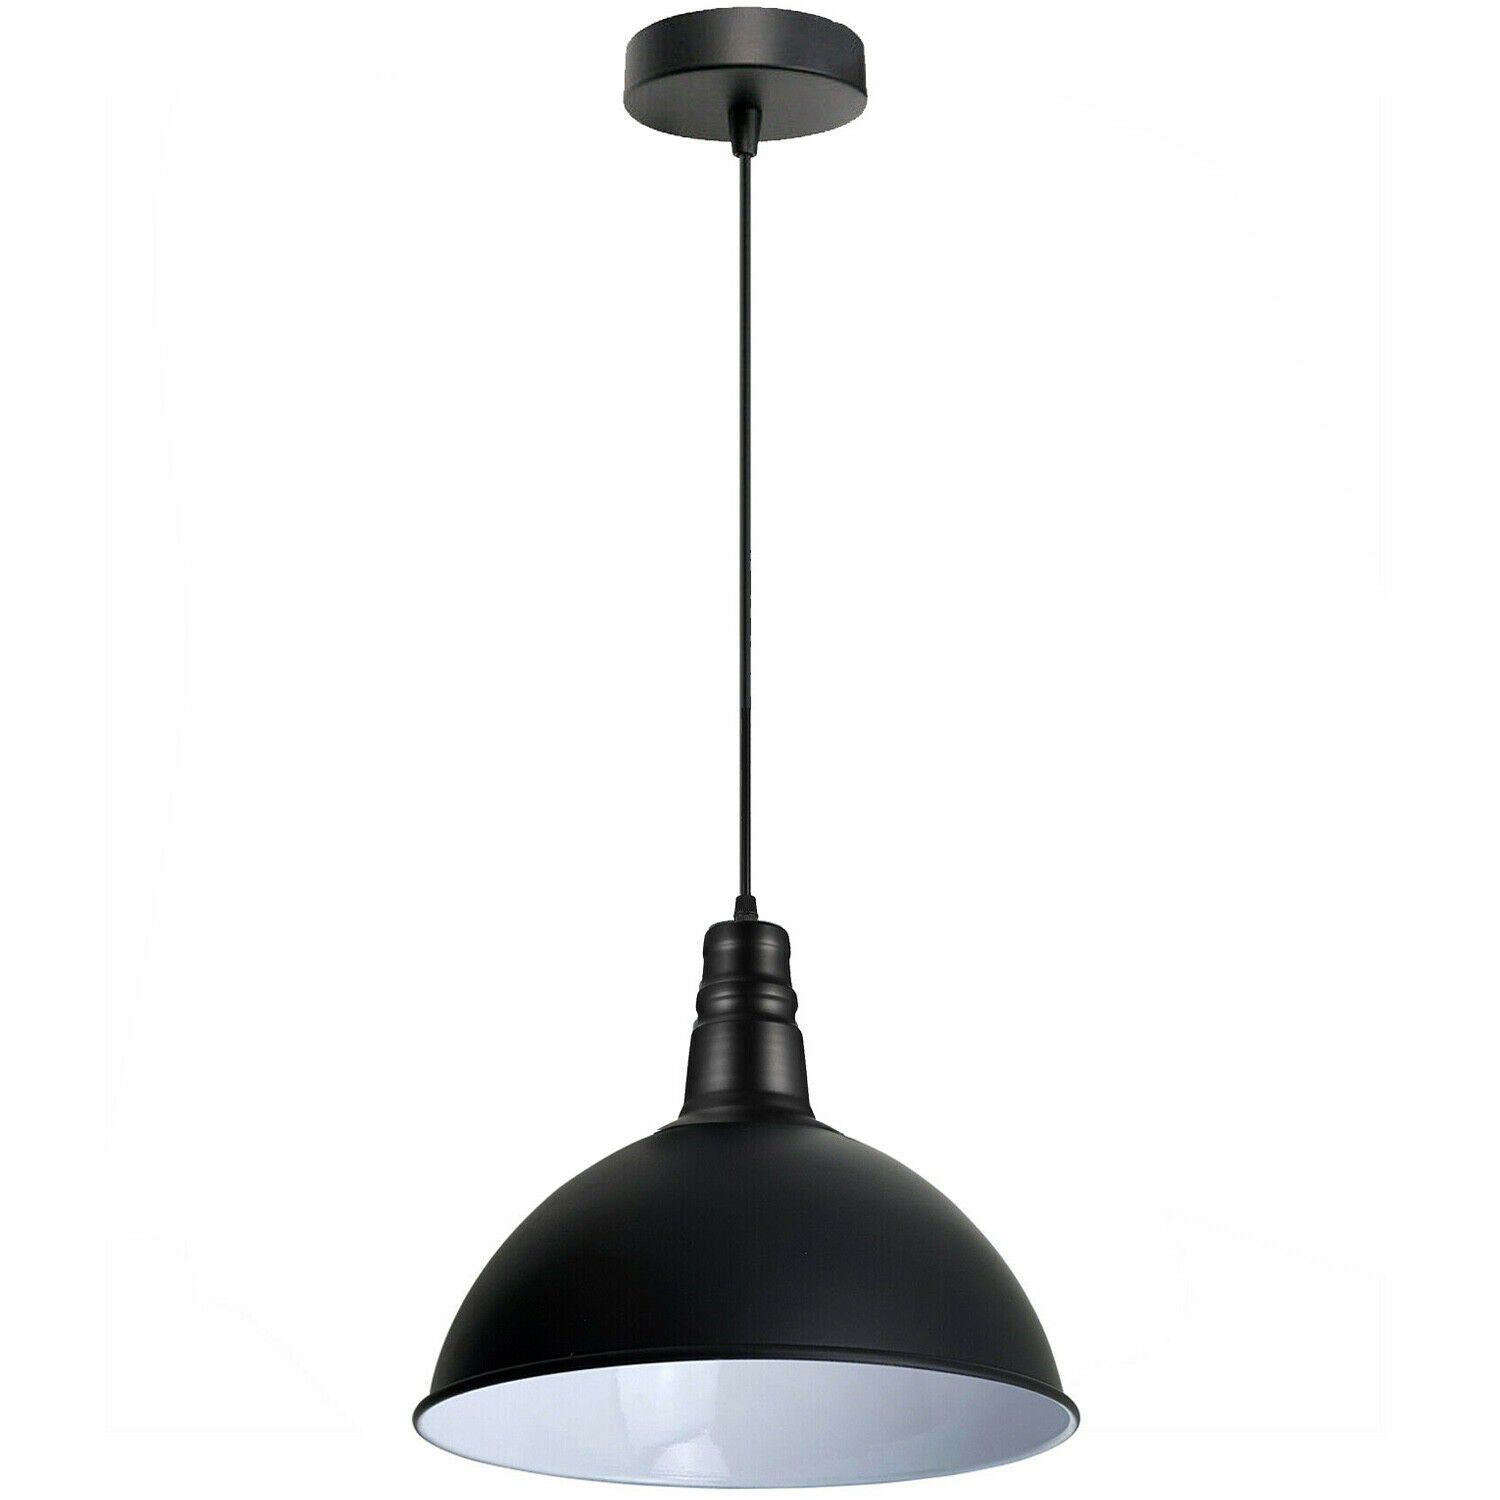 Black Industrial Vintage Style Ceiling Pendant Light Fittings Metal Lampshades~1976 - LEDSone UK Ltd